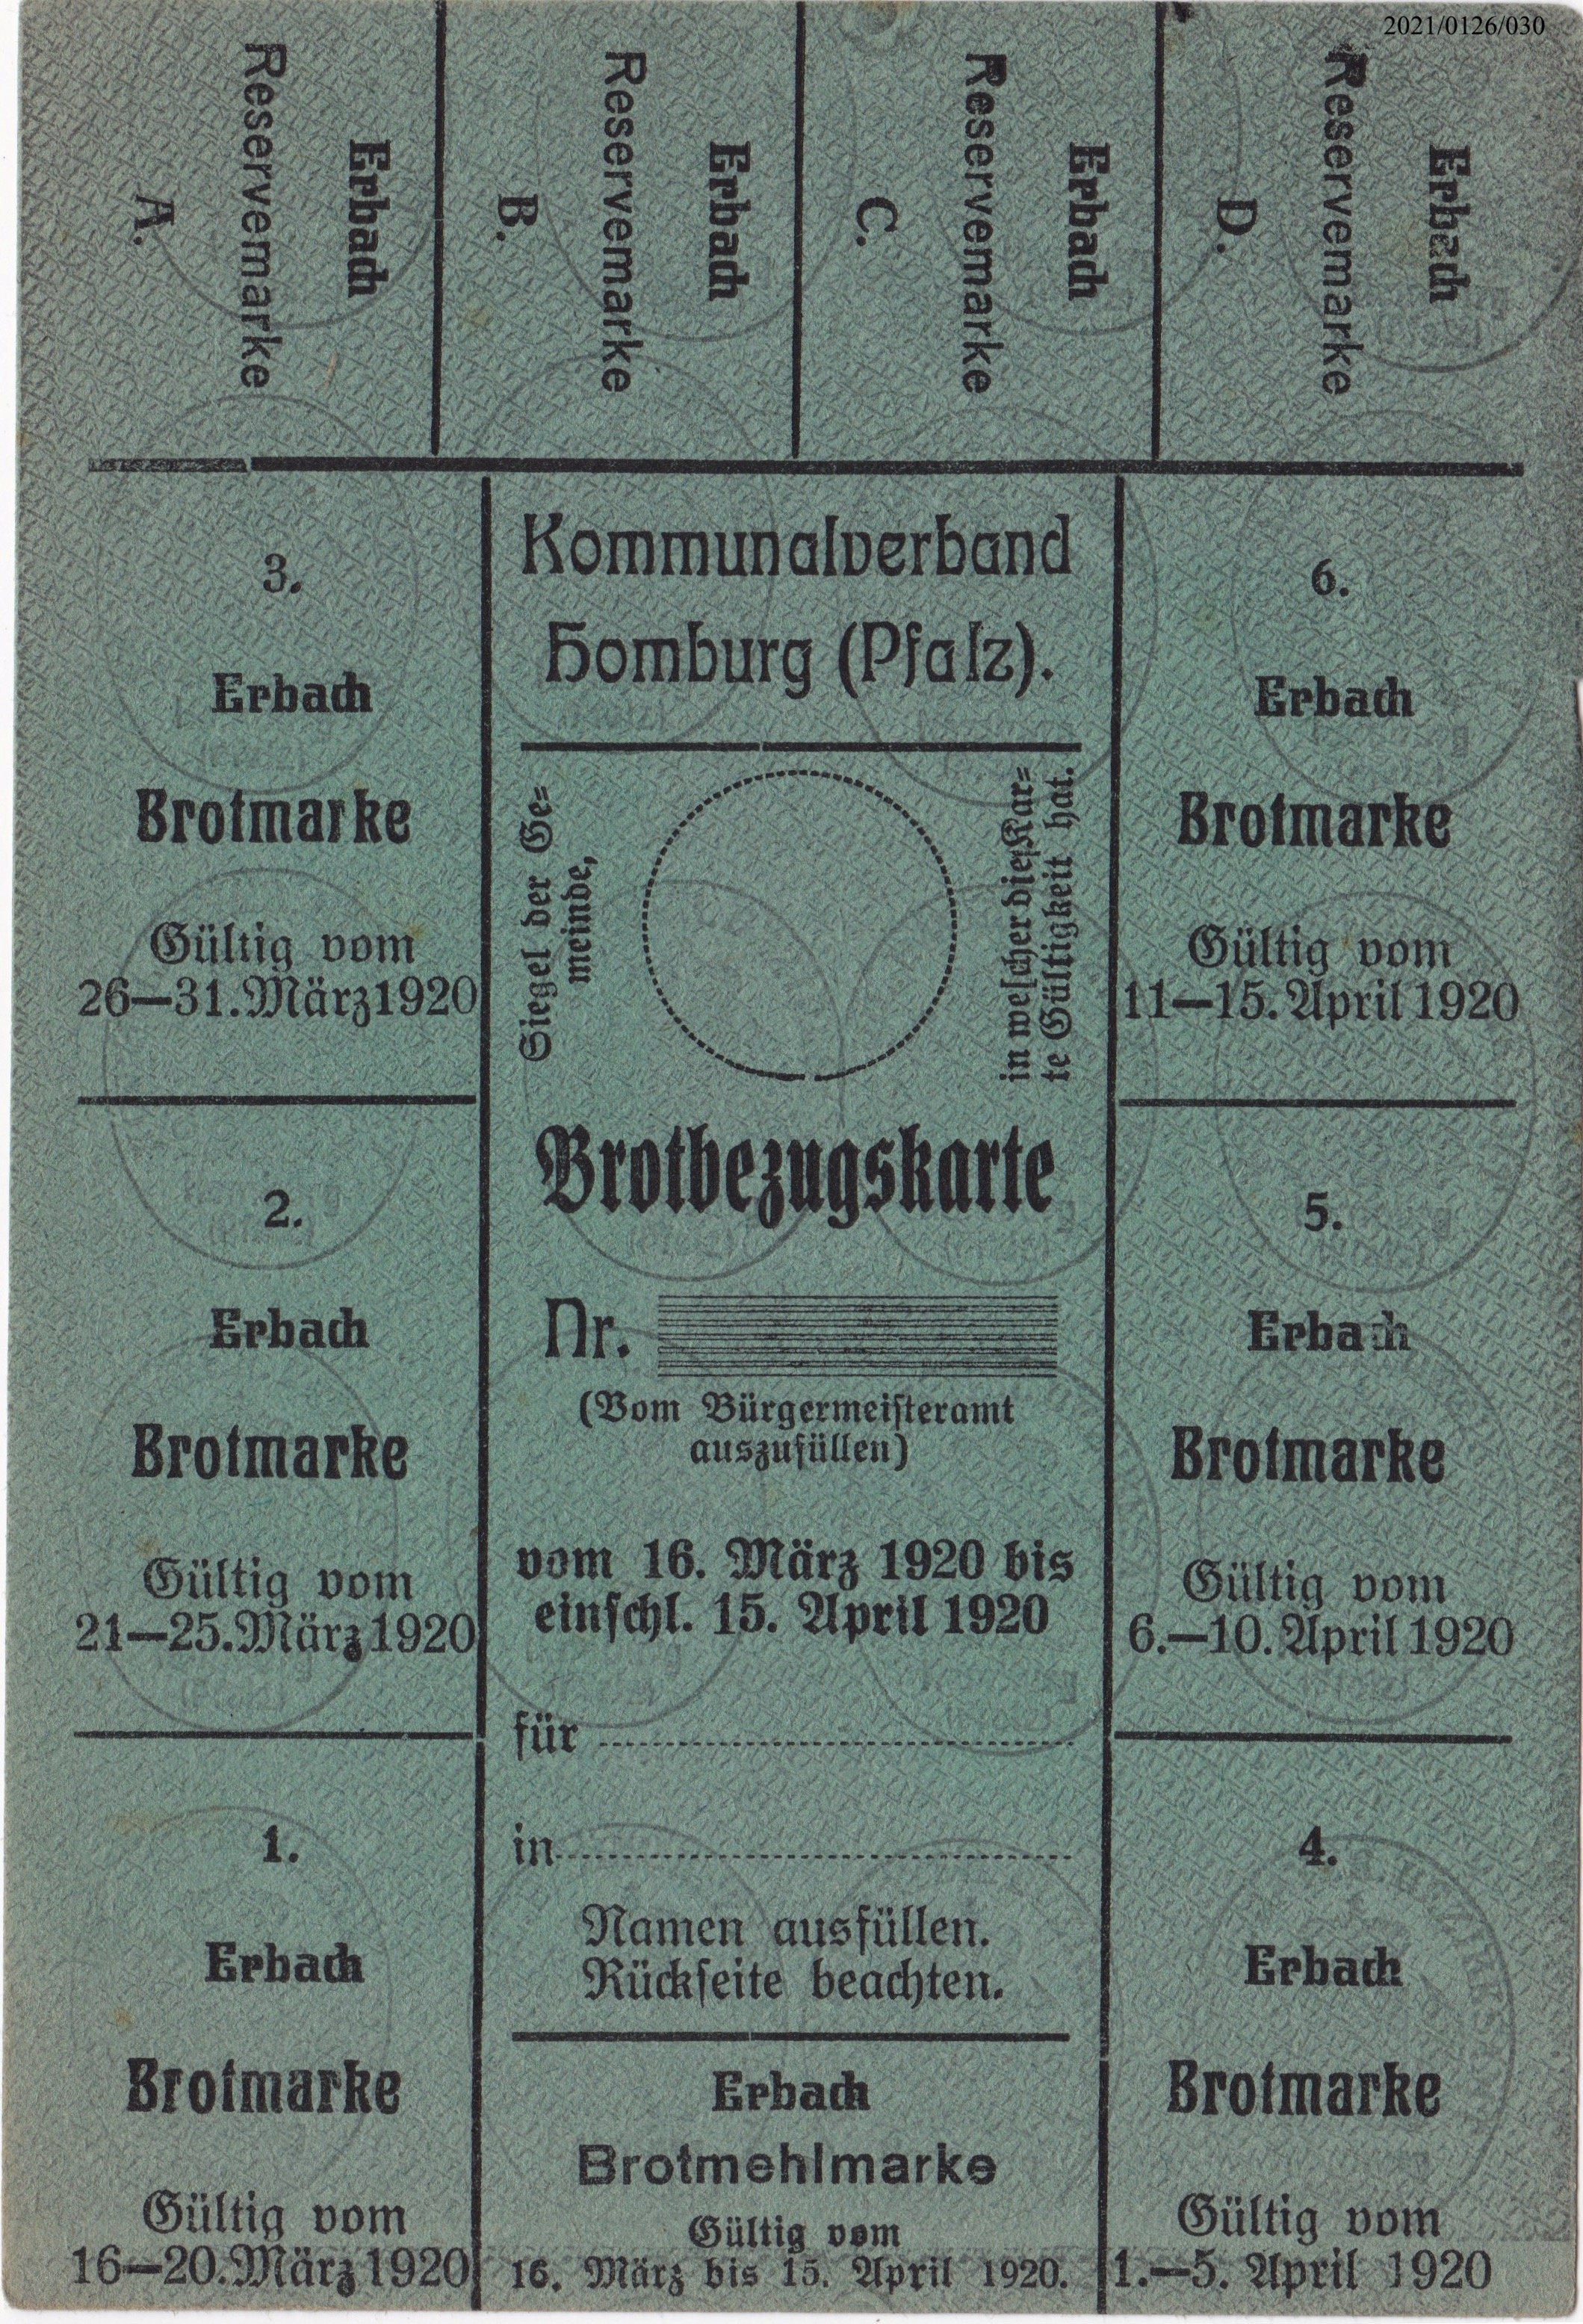 Brotbezugskarte Kommunalverband Homburg (Pfalz) 1920 (Museumsgesellschaft Bad Dürkheim e. V. CC BY-NC-SA)